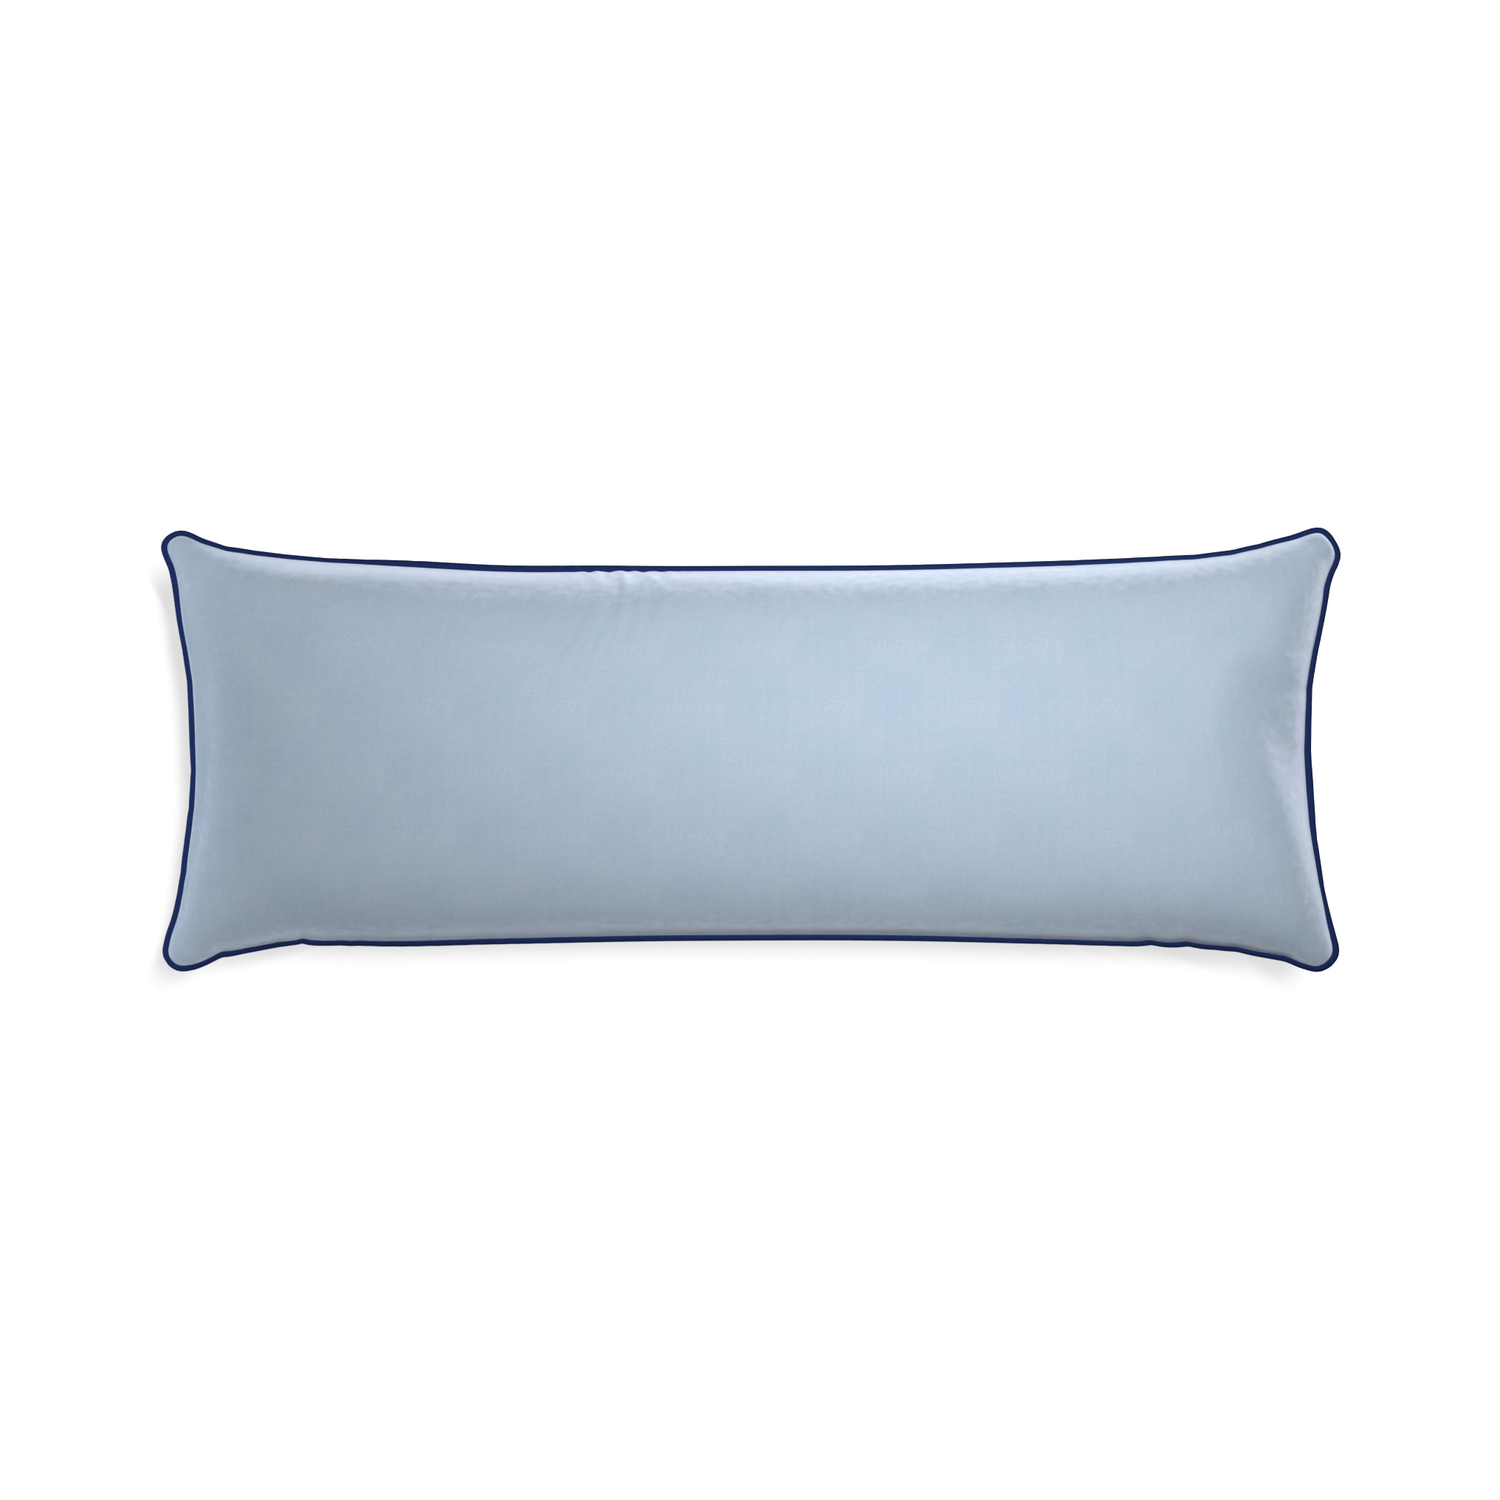 rectangle light blue velvet pillow with navy blue piping